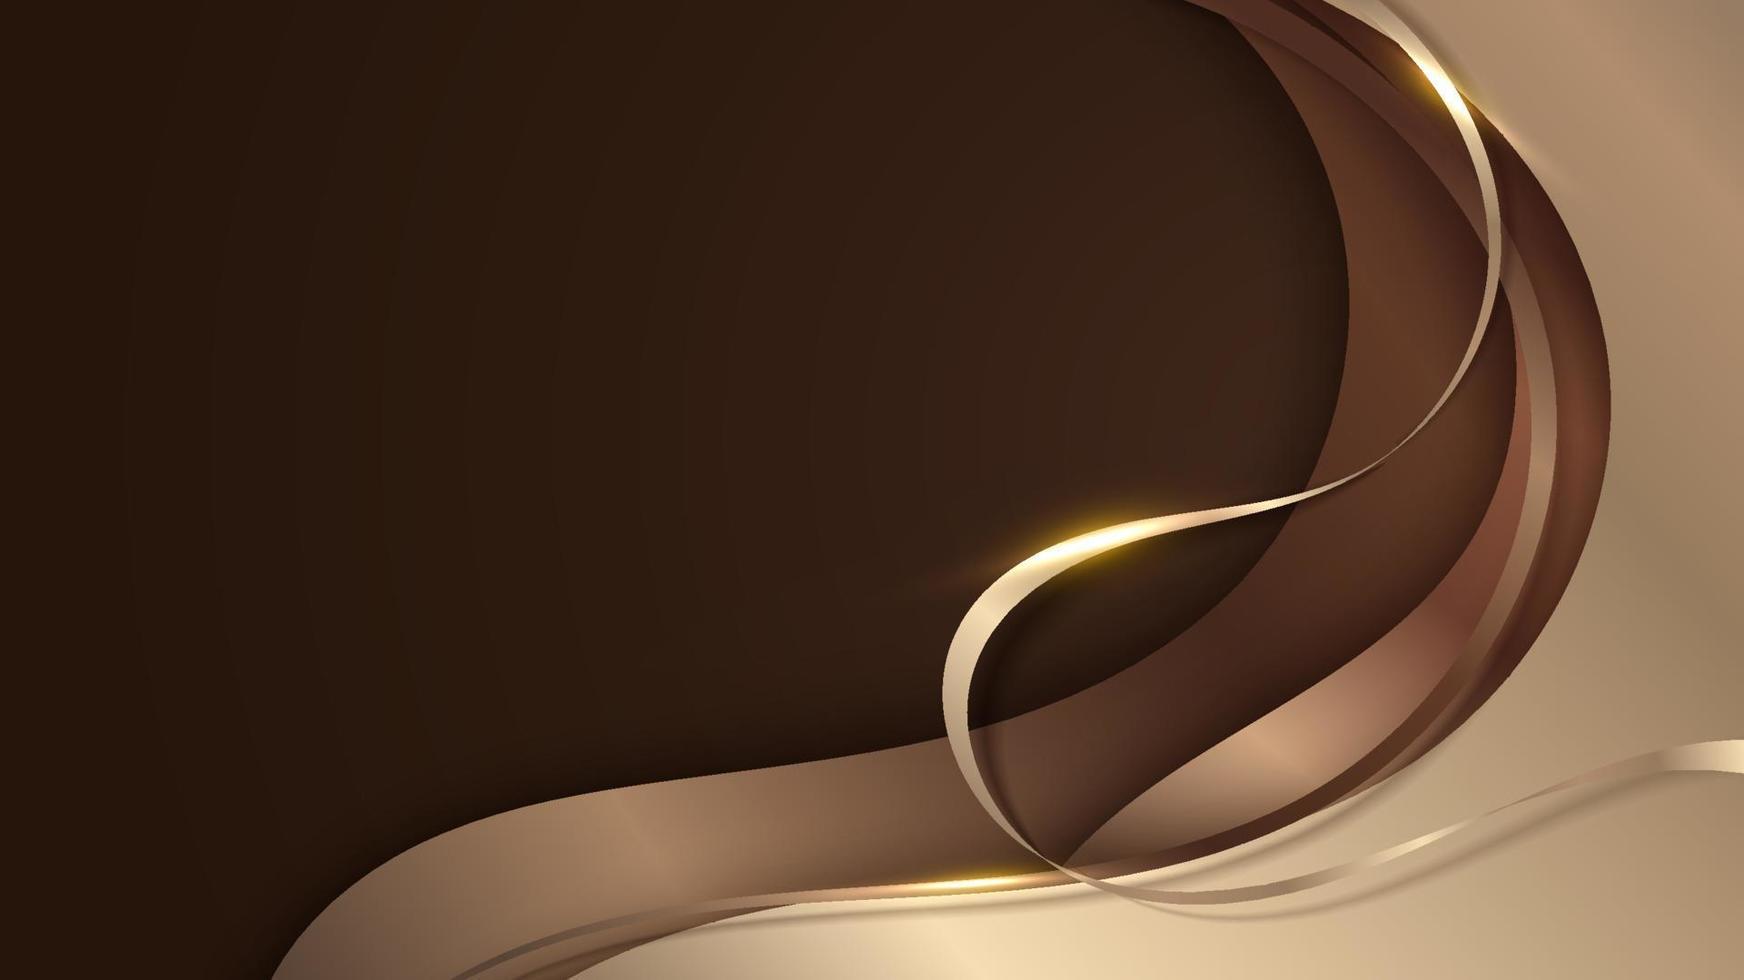 abstrakt 3d modern lyx banner designmall golden wave papper skuren med guld band linjer på brun bakgrund vektor